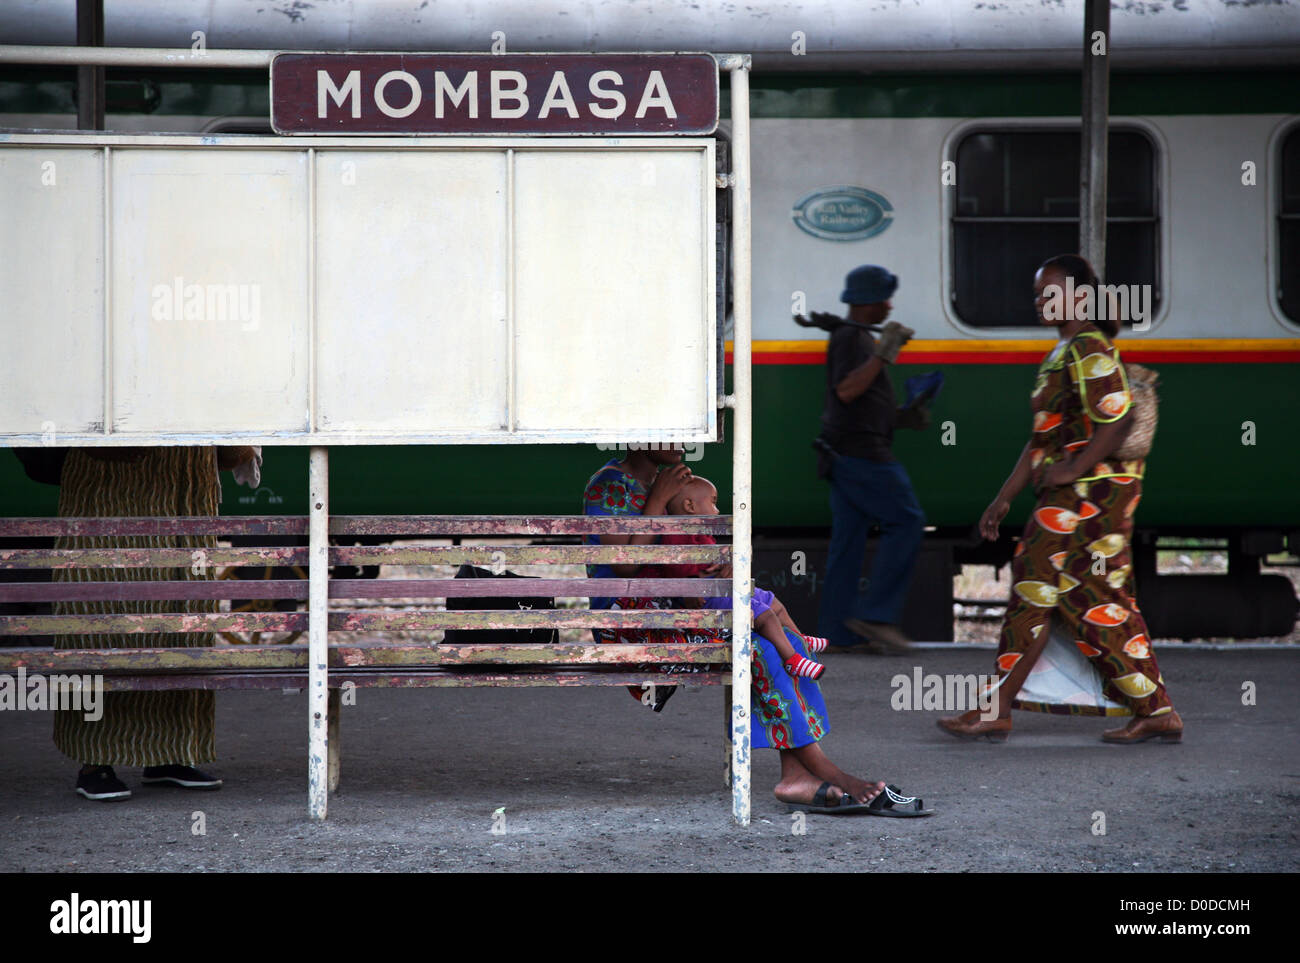 Mombasa Train Station, Mombasa, Kenya, East Africa. 12/2/2009. Photograph: Stuart Boulton/Alamy Stock Photo